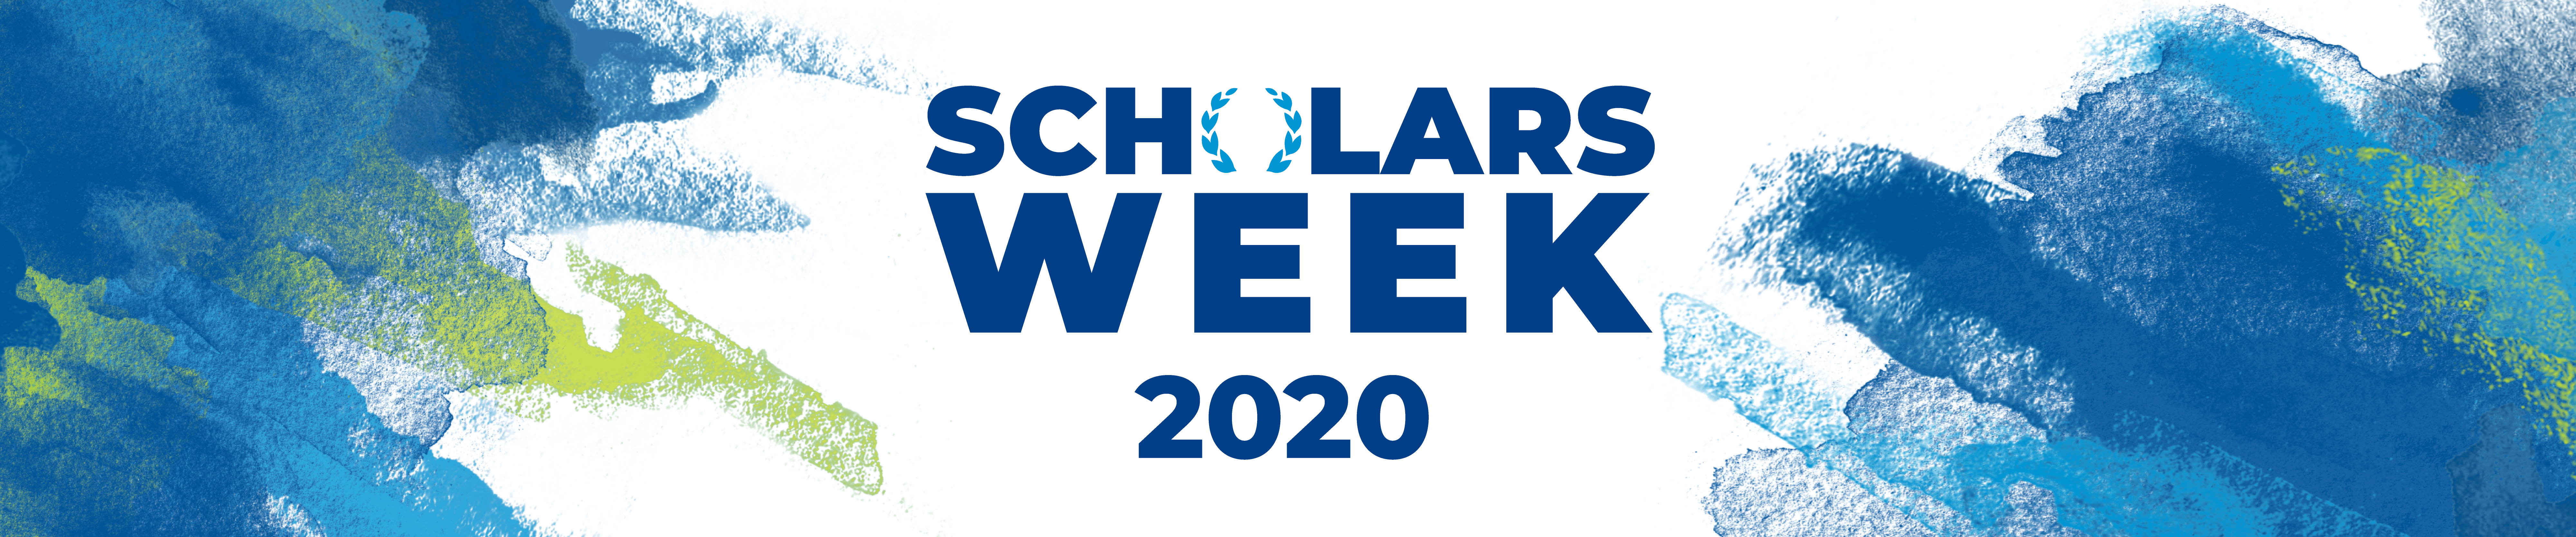 Scholars week moving online for 2020